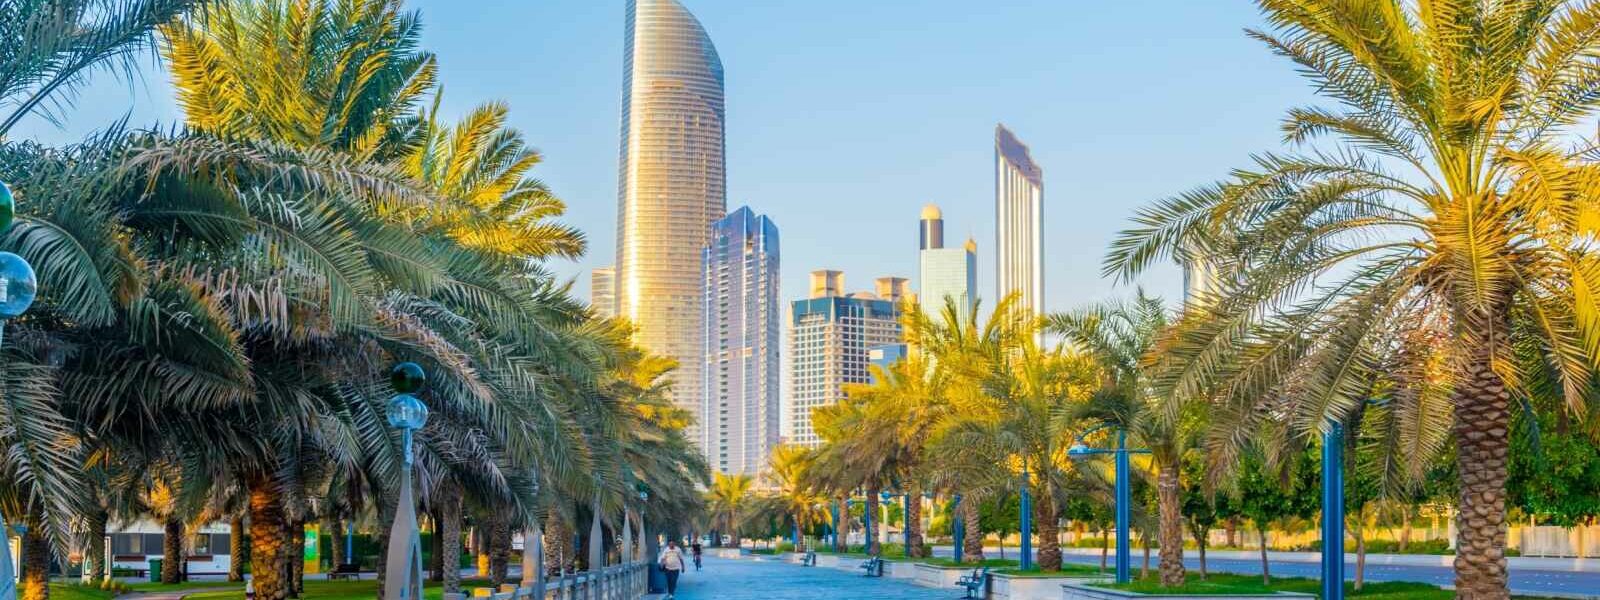 Vue de la corniche, Promenade à Abu Dhabi, Emirats Arabes Unis